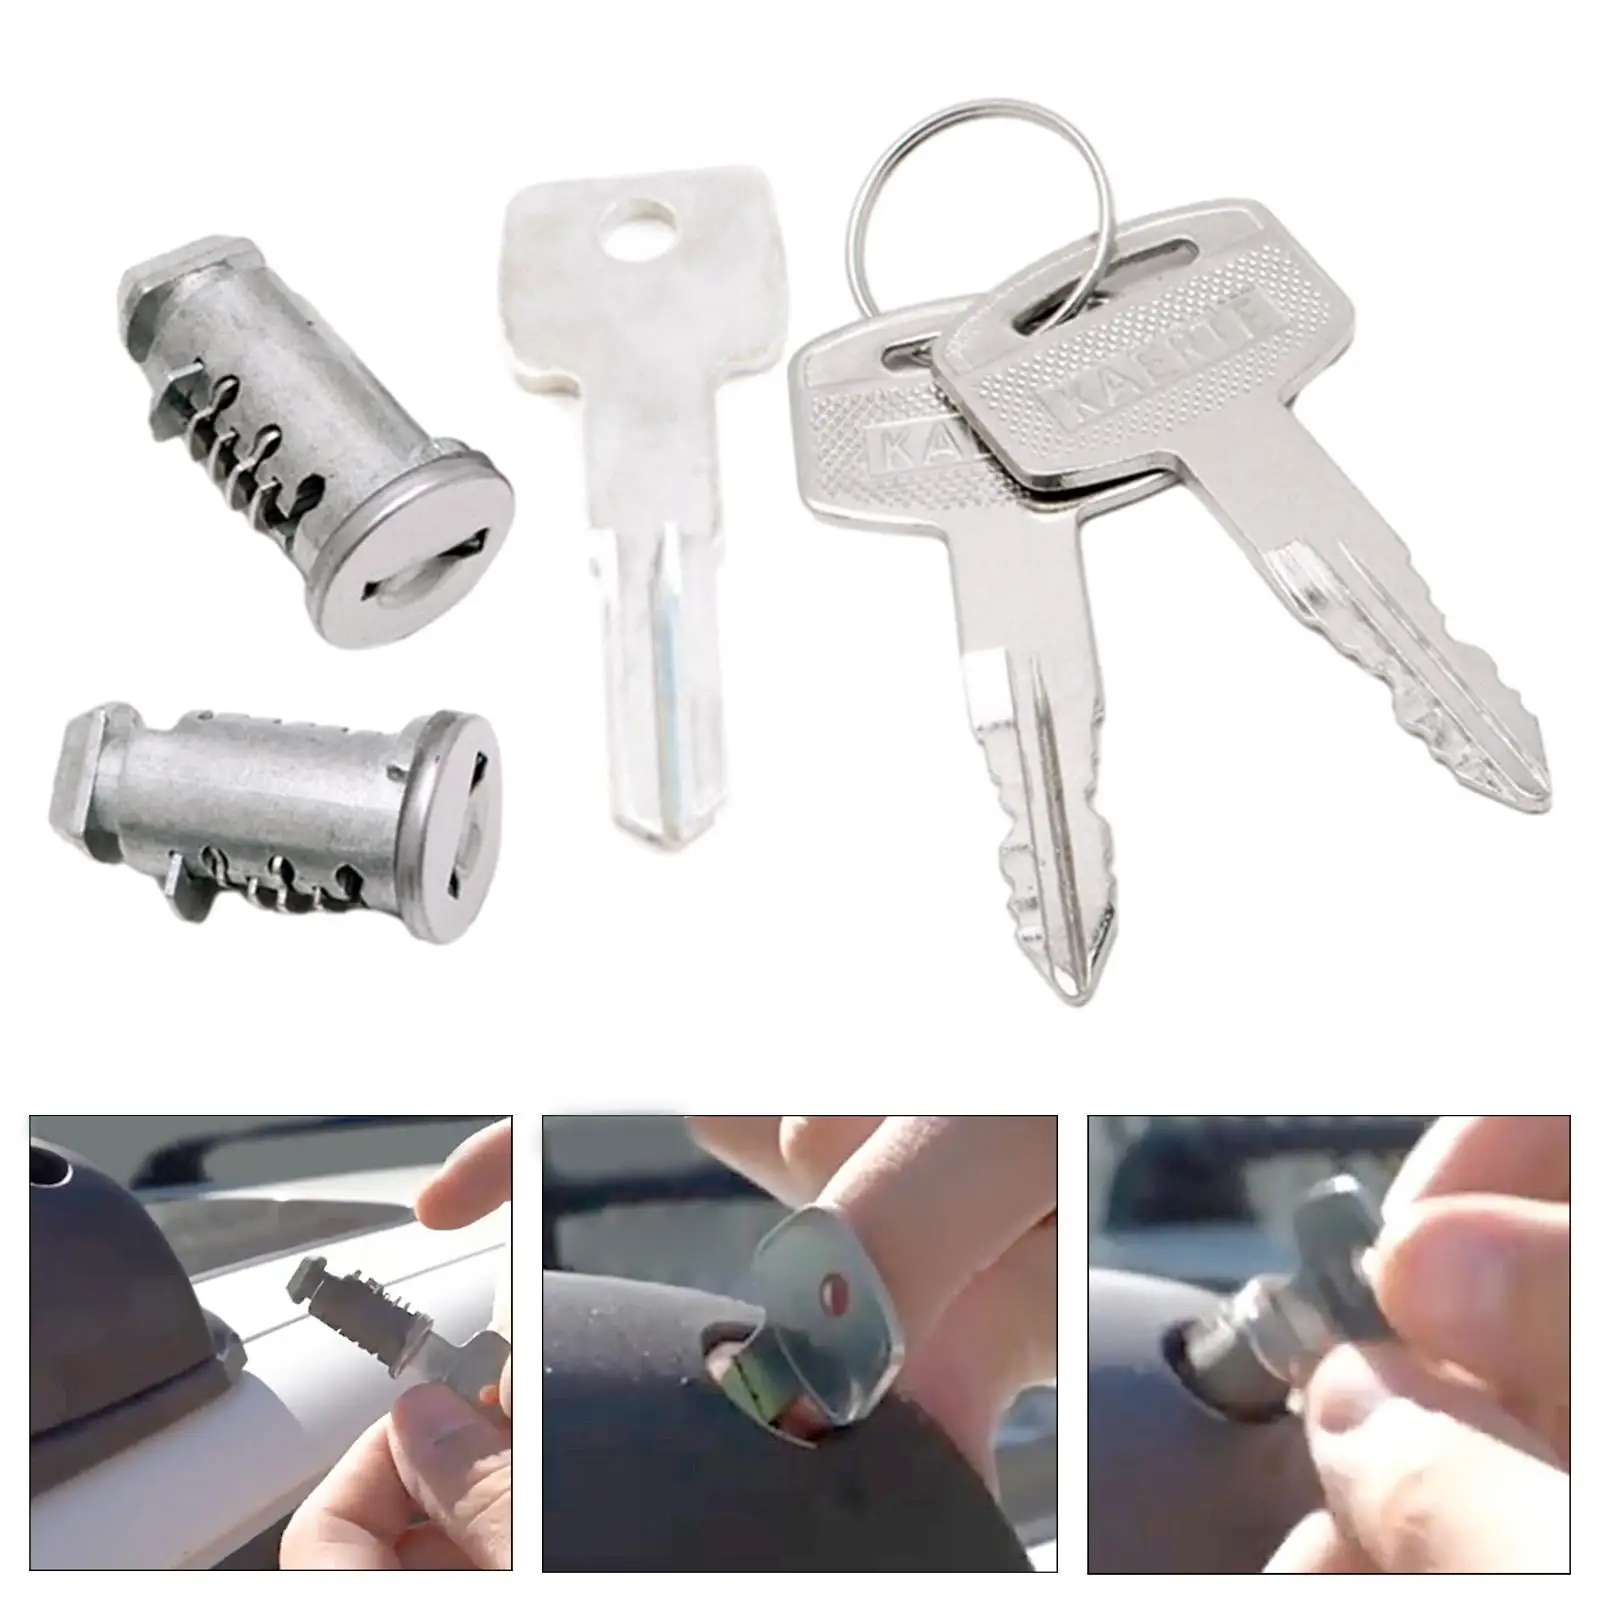 2x Lock Cylinders for Car Racks System Lock ,Core Roof Rack Locks, Cross Bars Locks and Key Kit Crossbar Locks for SUV